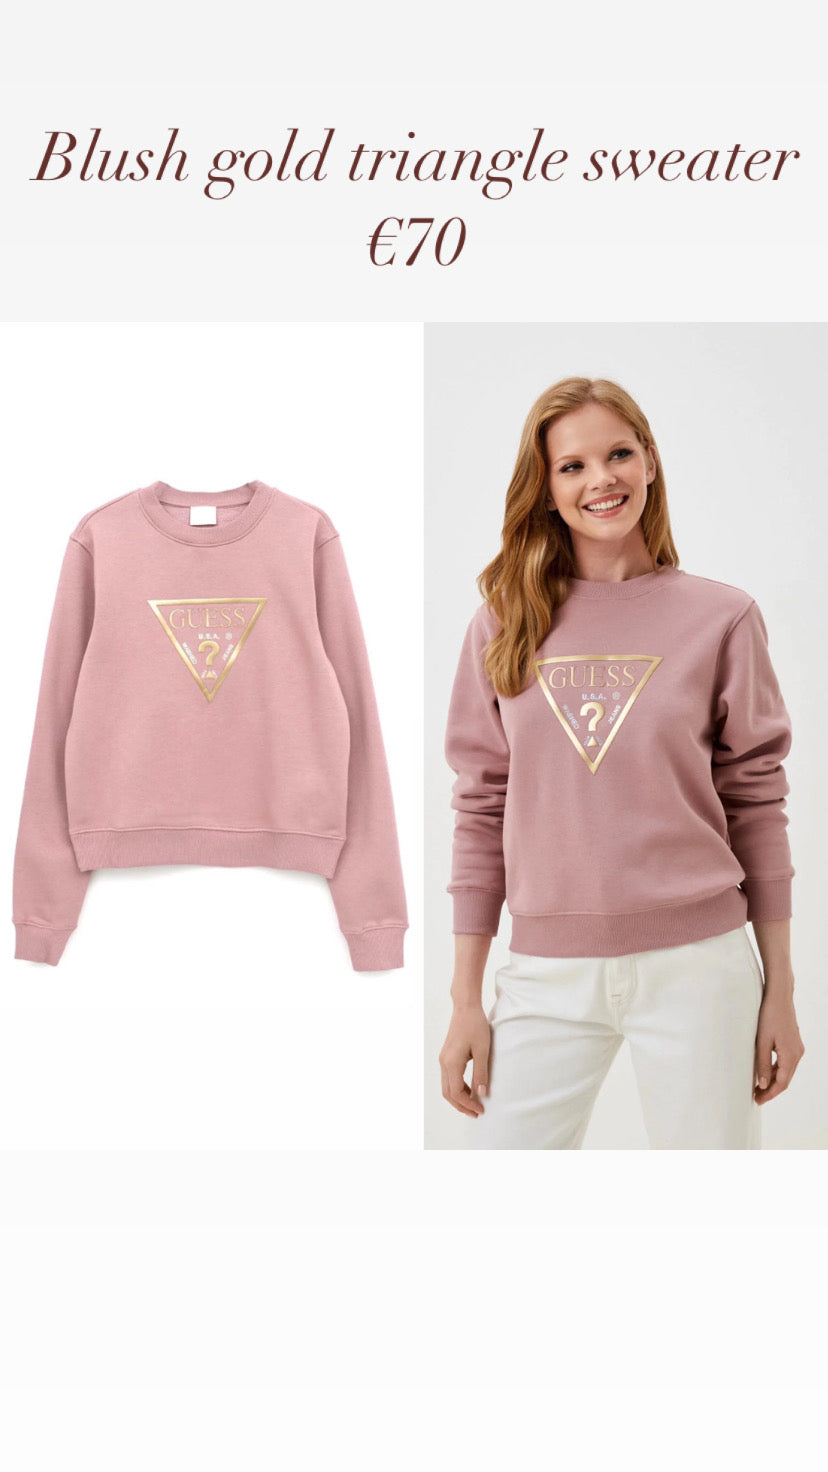 Blush gold triangle sweater